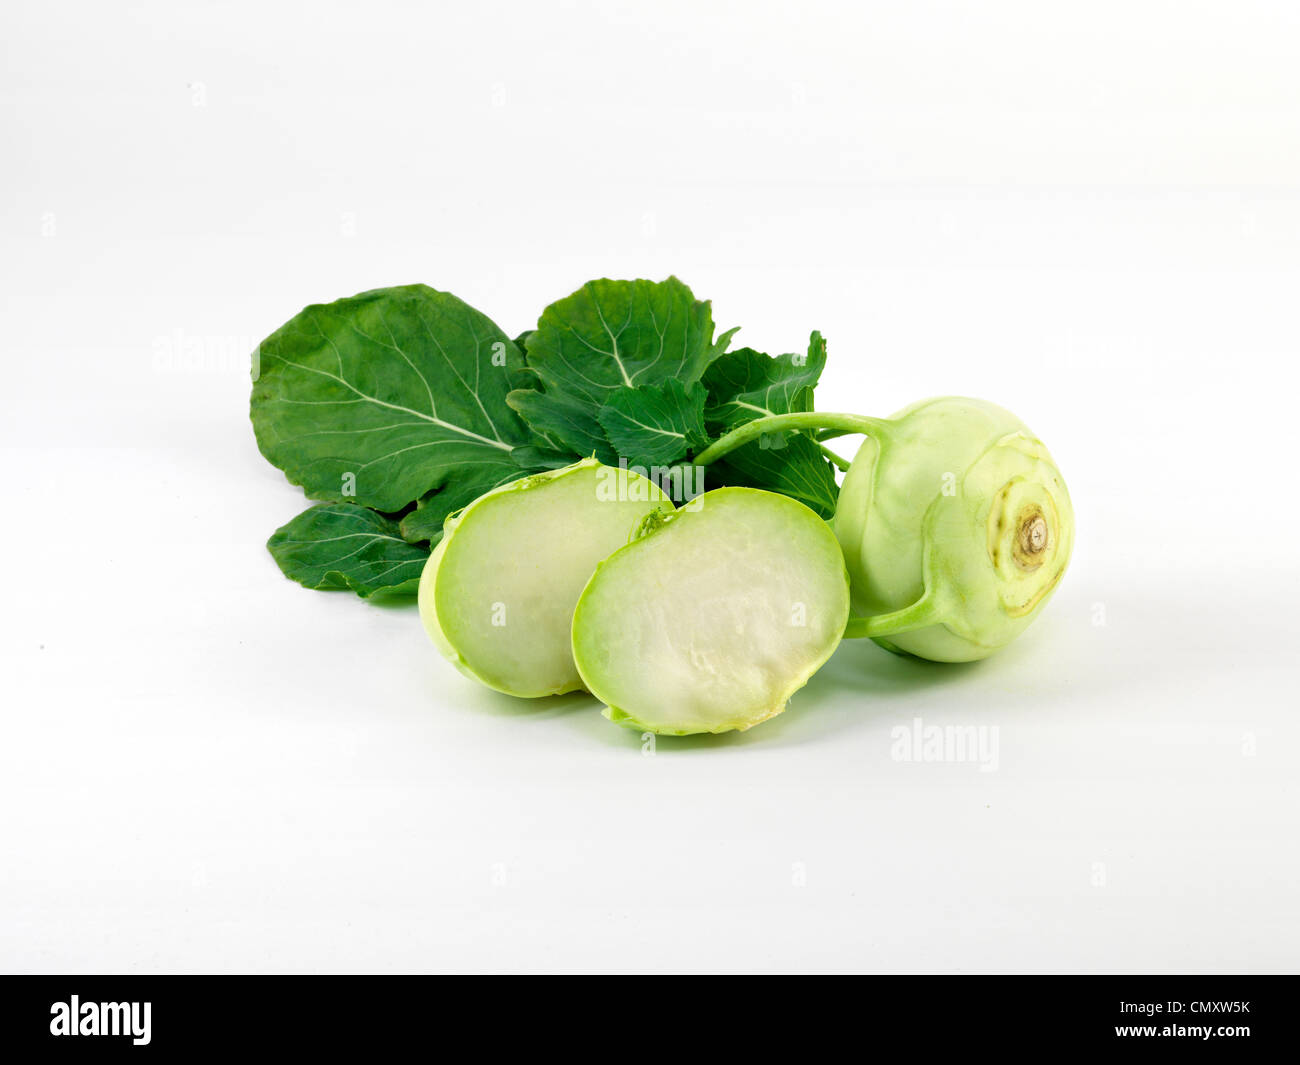 kohlrabi,turnip cabbage Stock Photo